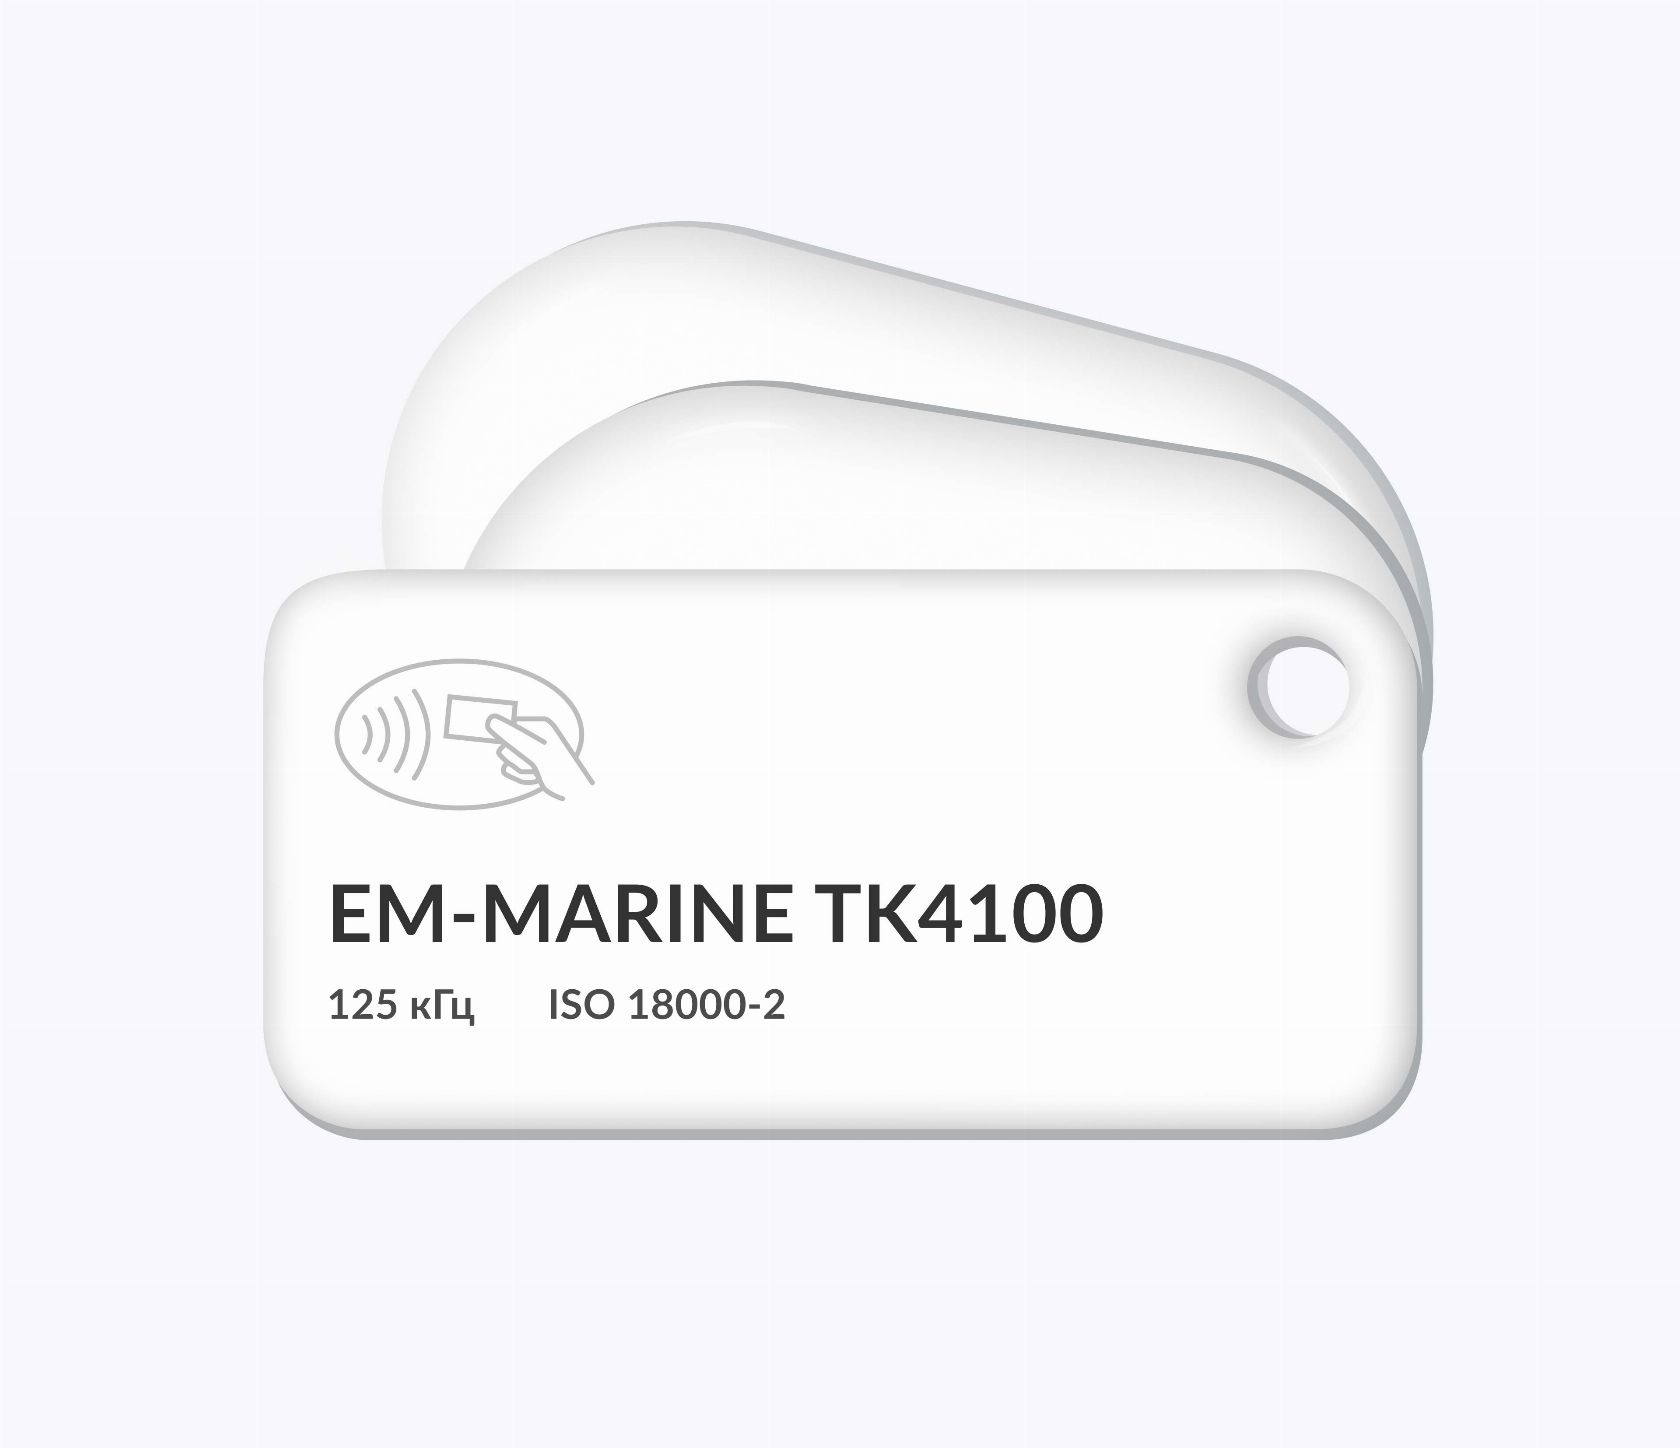 RFID-брелоки NEOKEY® с чипом EM-MARINE TK4100 и вашим логотипом